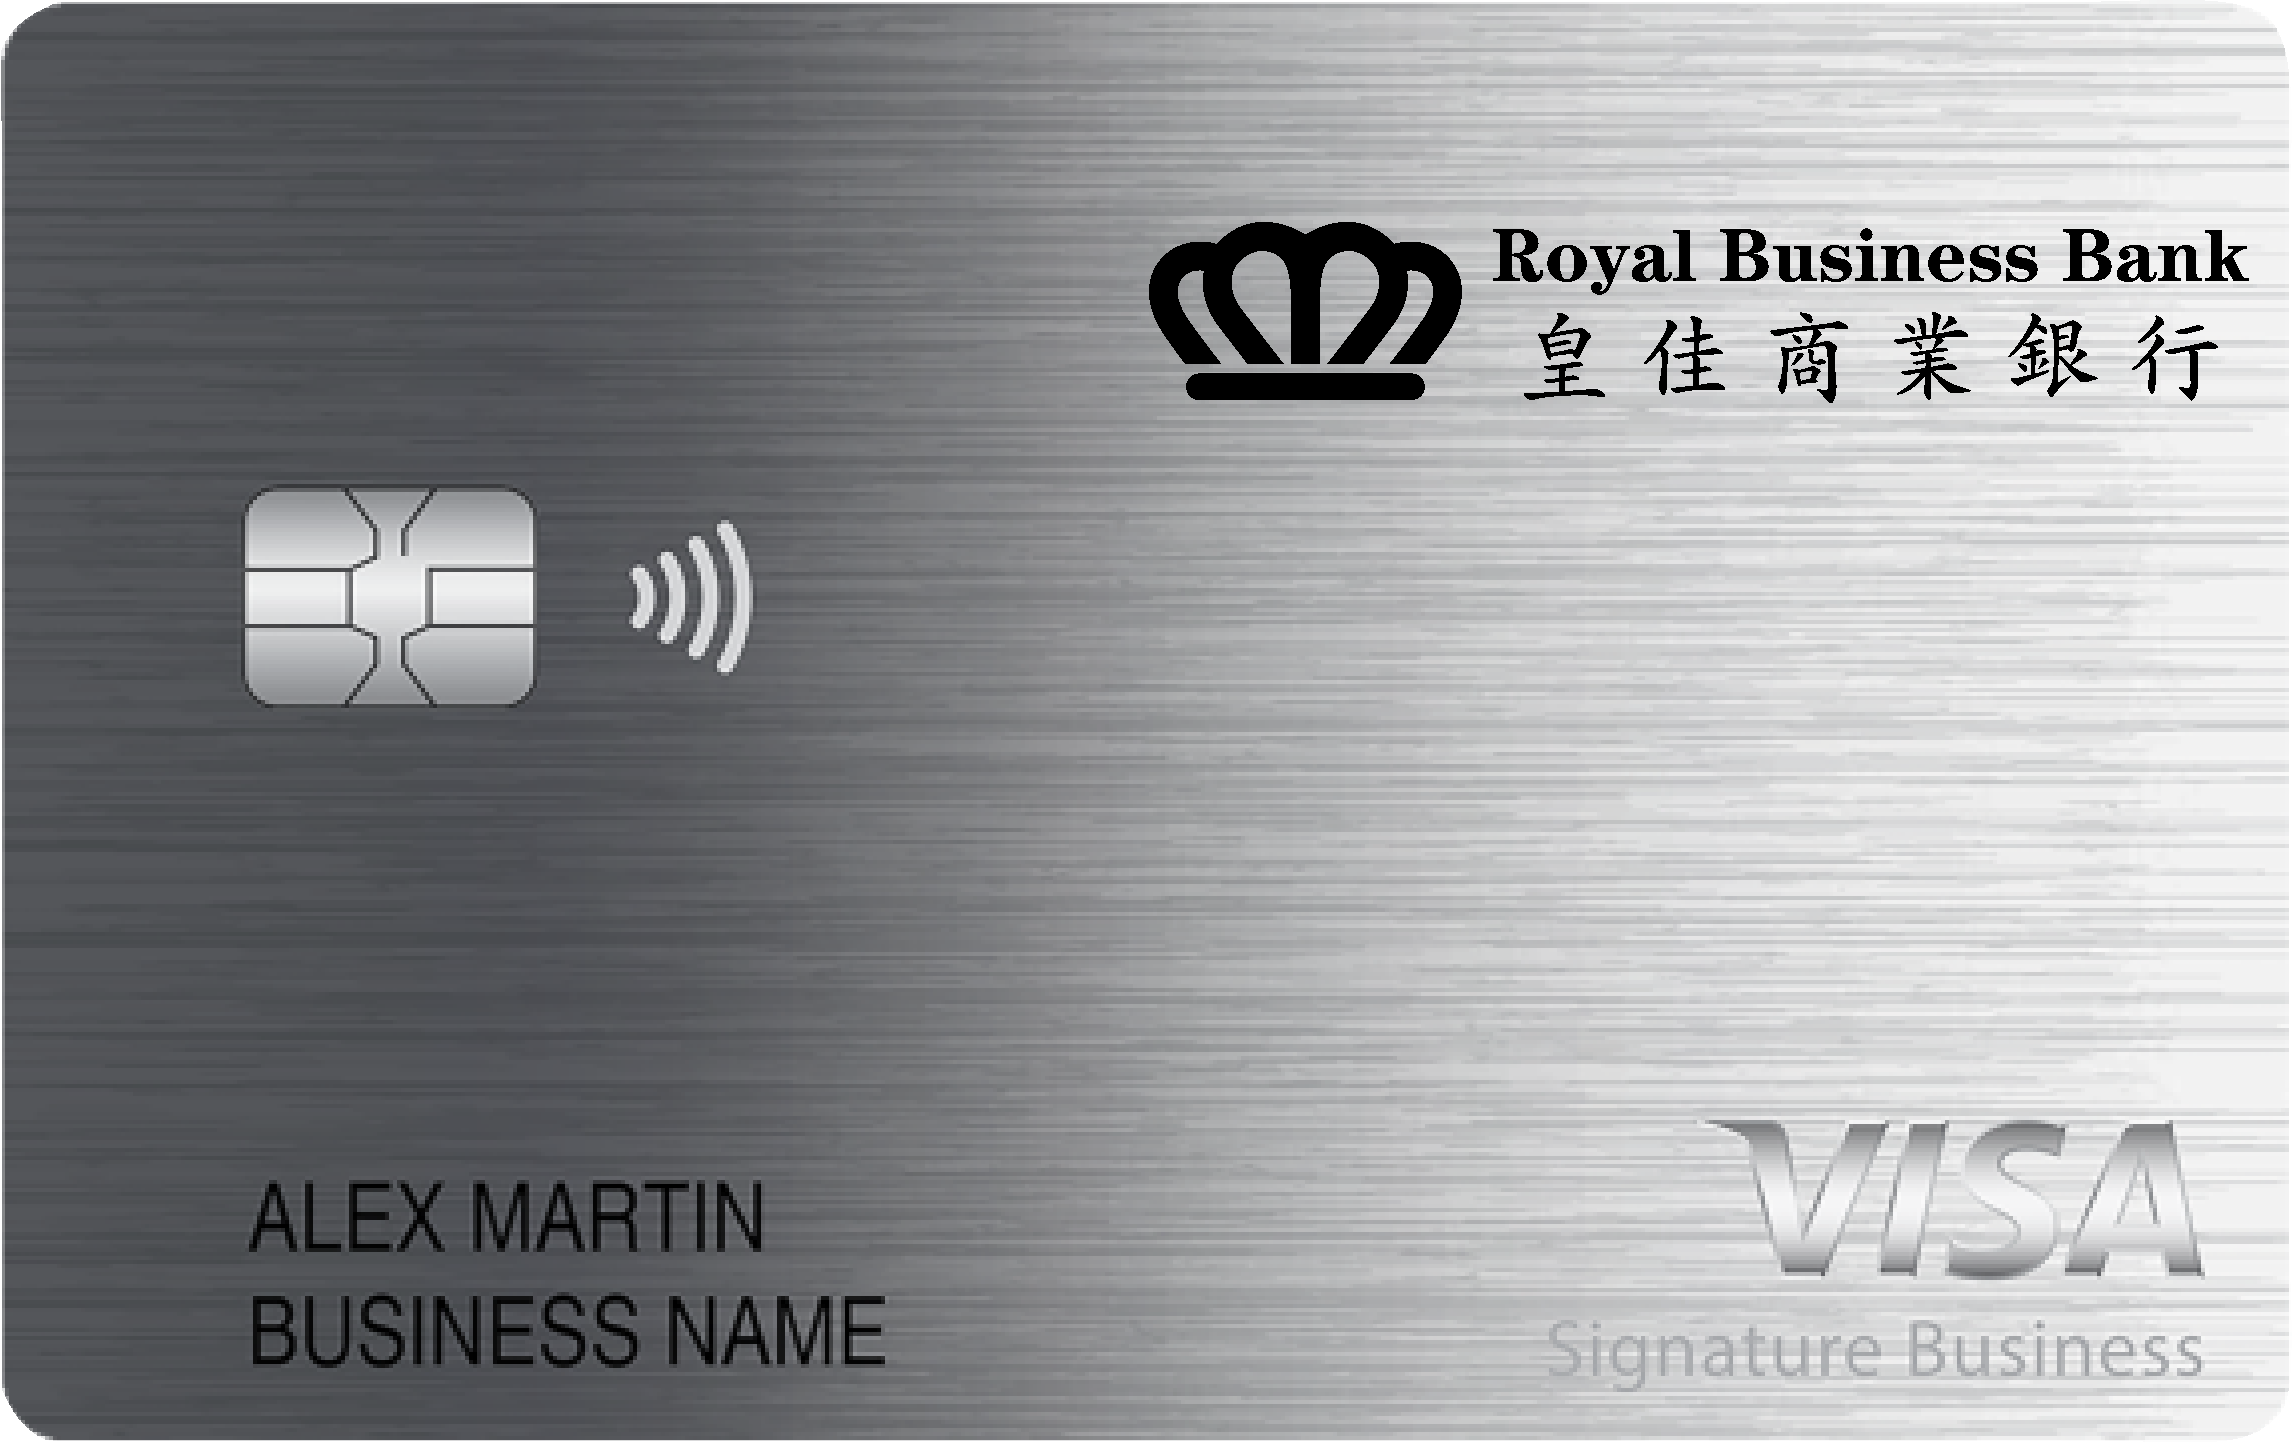 Royal Business Bank Smart Business Rewards Card